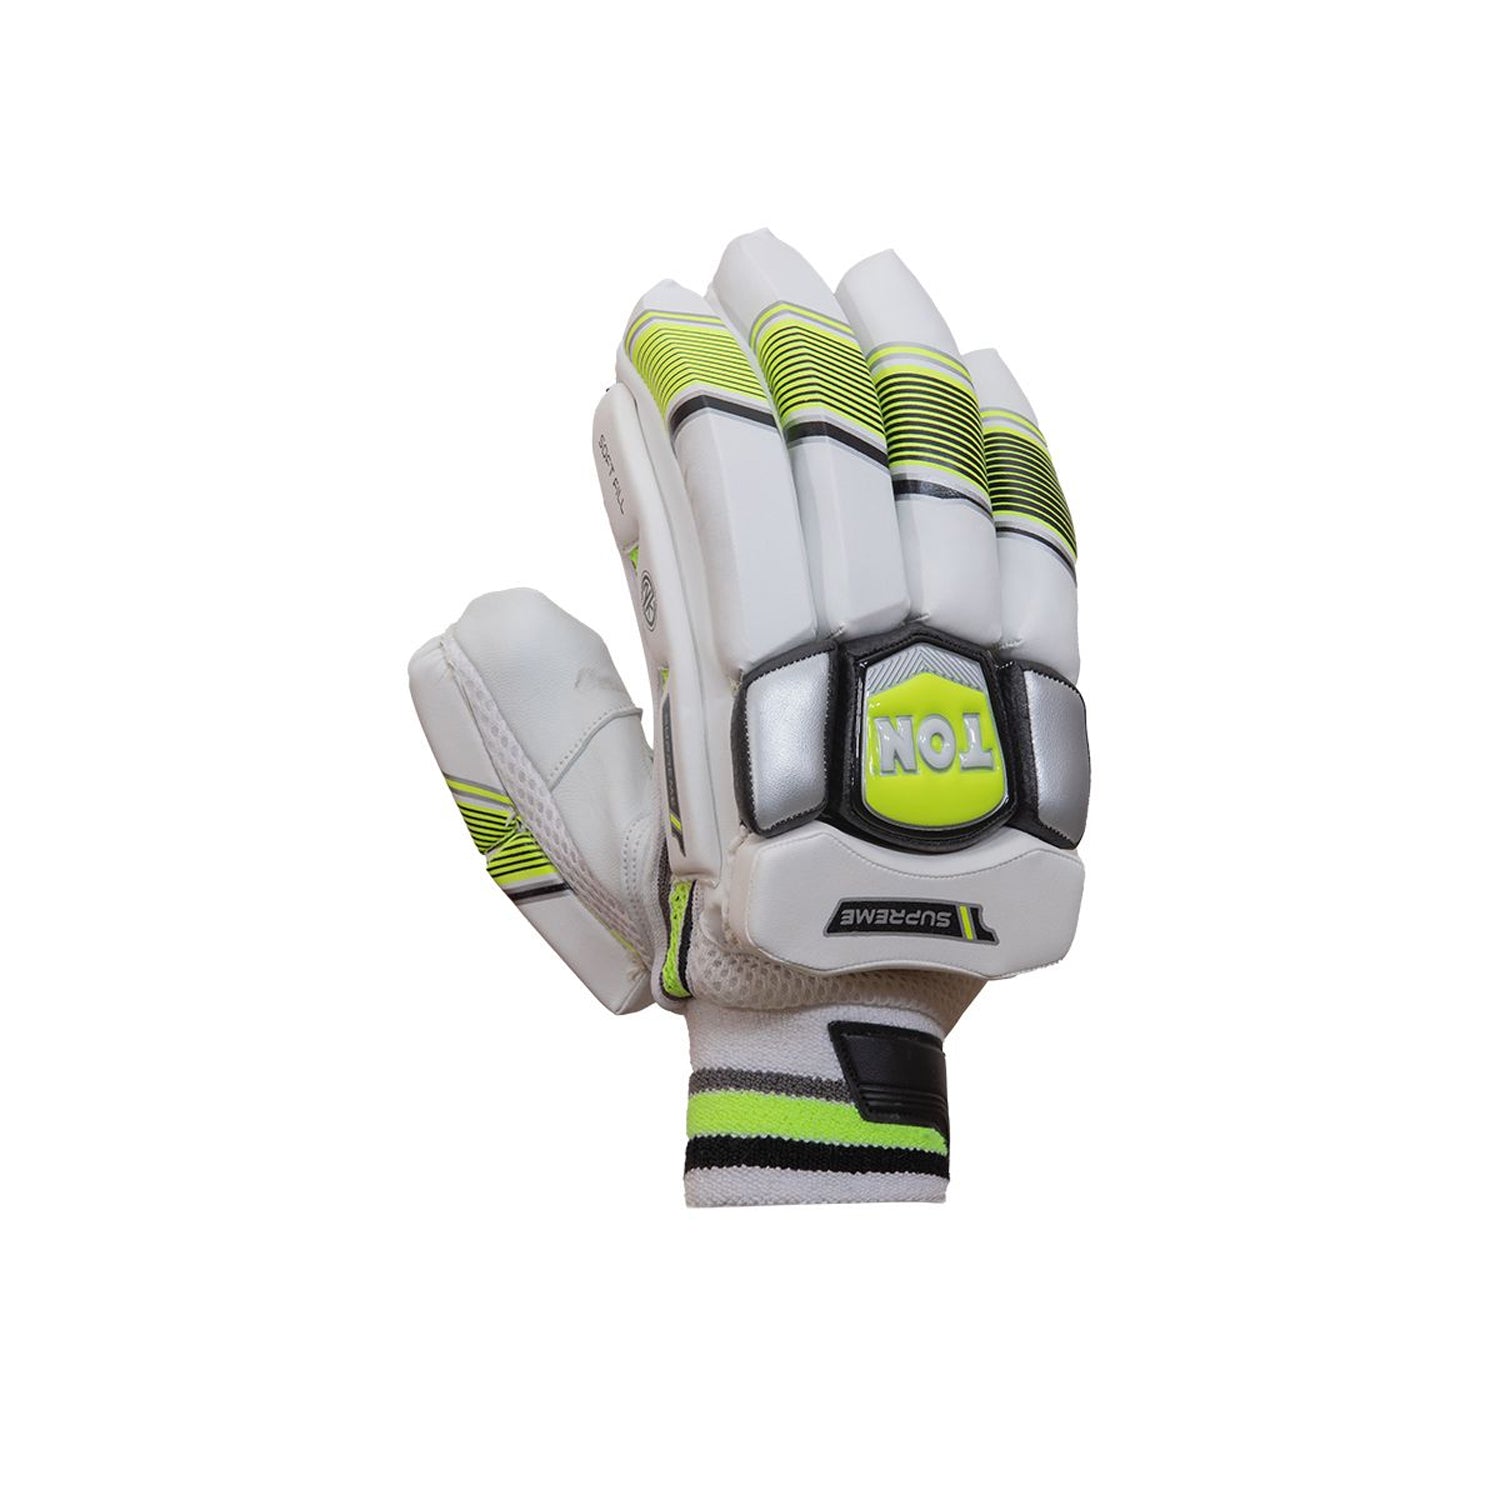 SS Supreme LH Cricket Batting Gloves - Mens - Best Price online Prokicksports.com